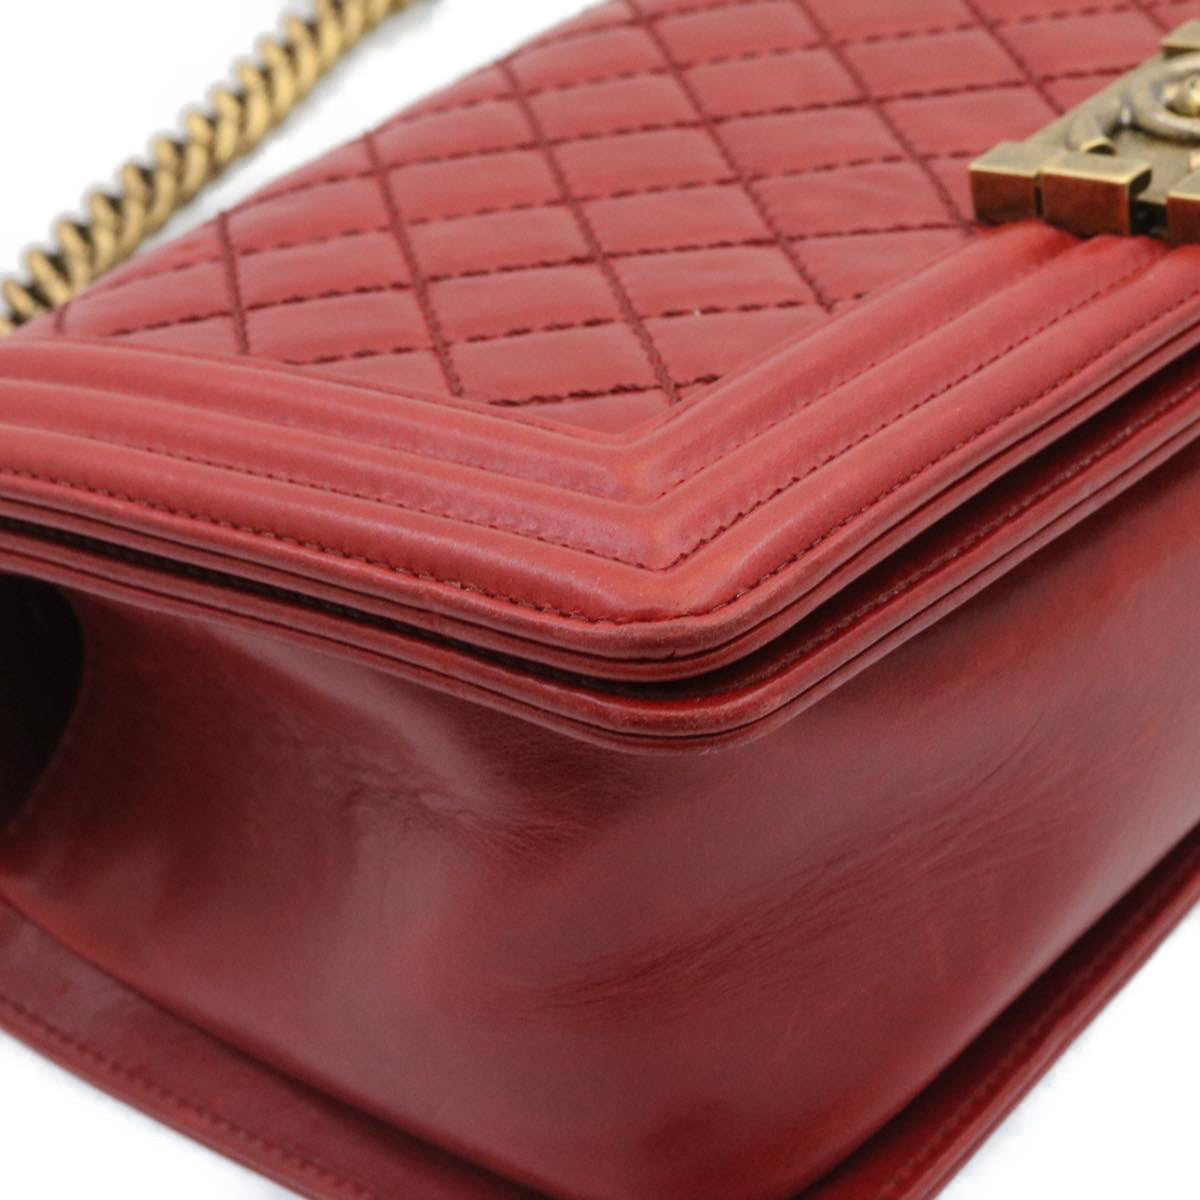 CHANEL Boy Chanel Matelasse Chain Flap Shoulder Bag Leather Red CC Auth knn010